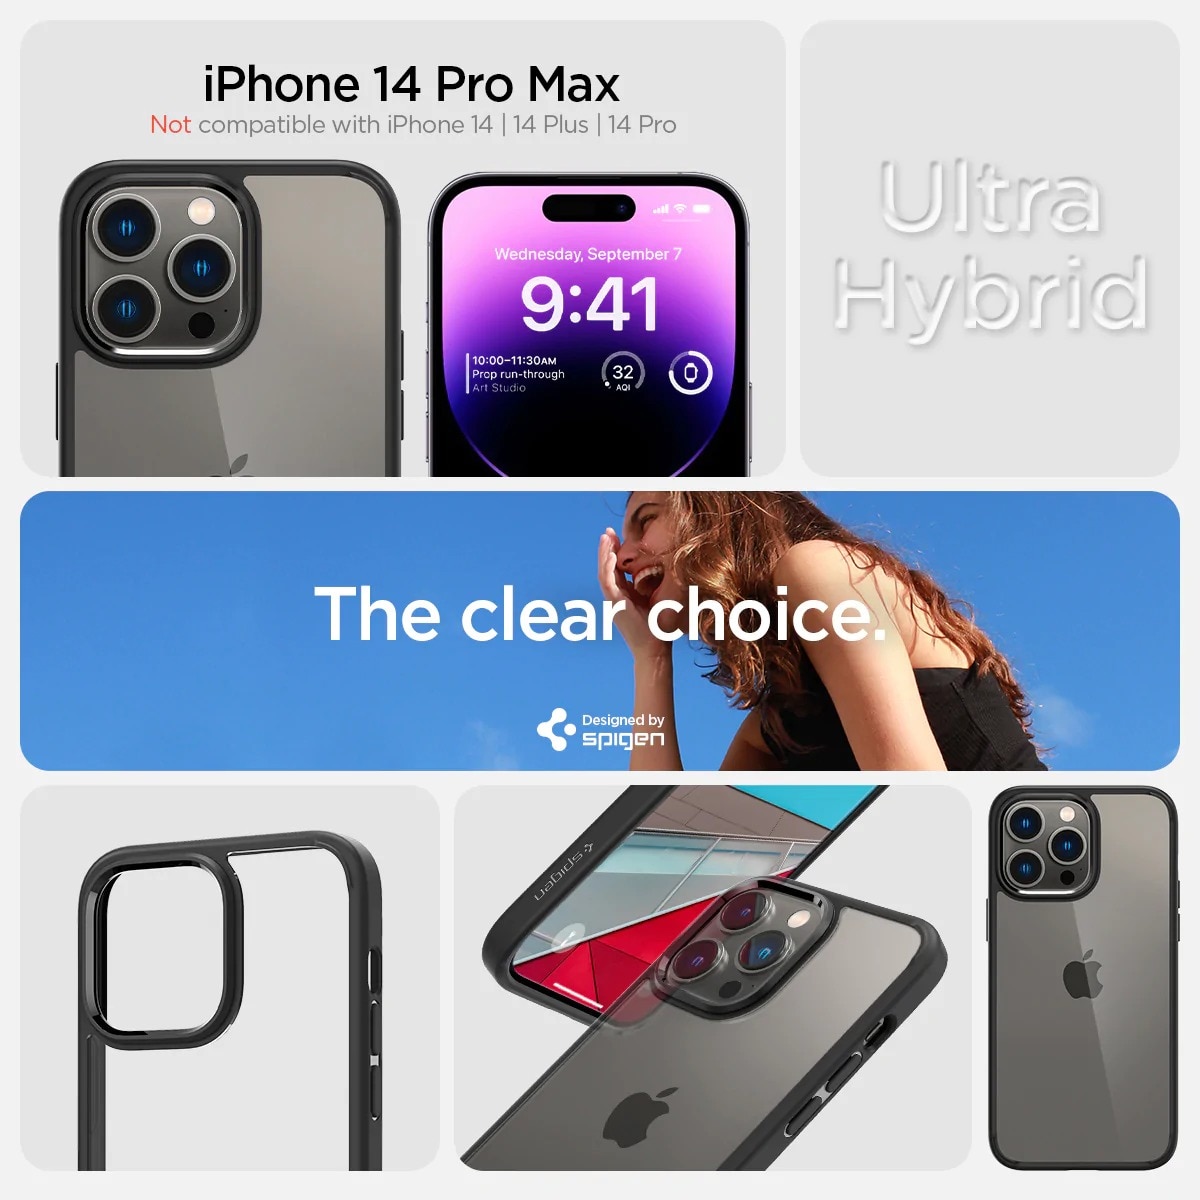 Funda Ultra Hybrid iPhone 14 Pro Max Matte Black